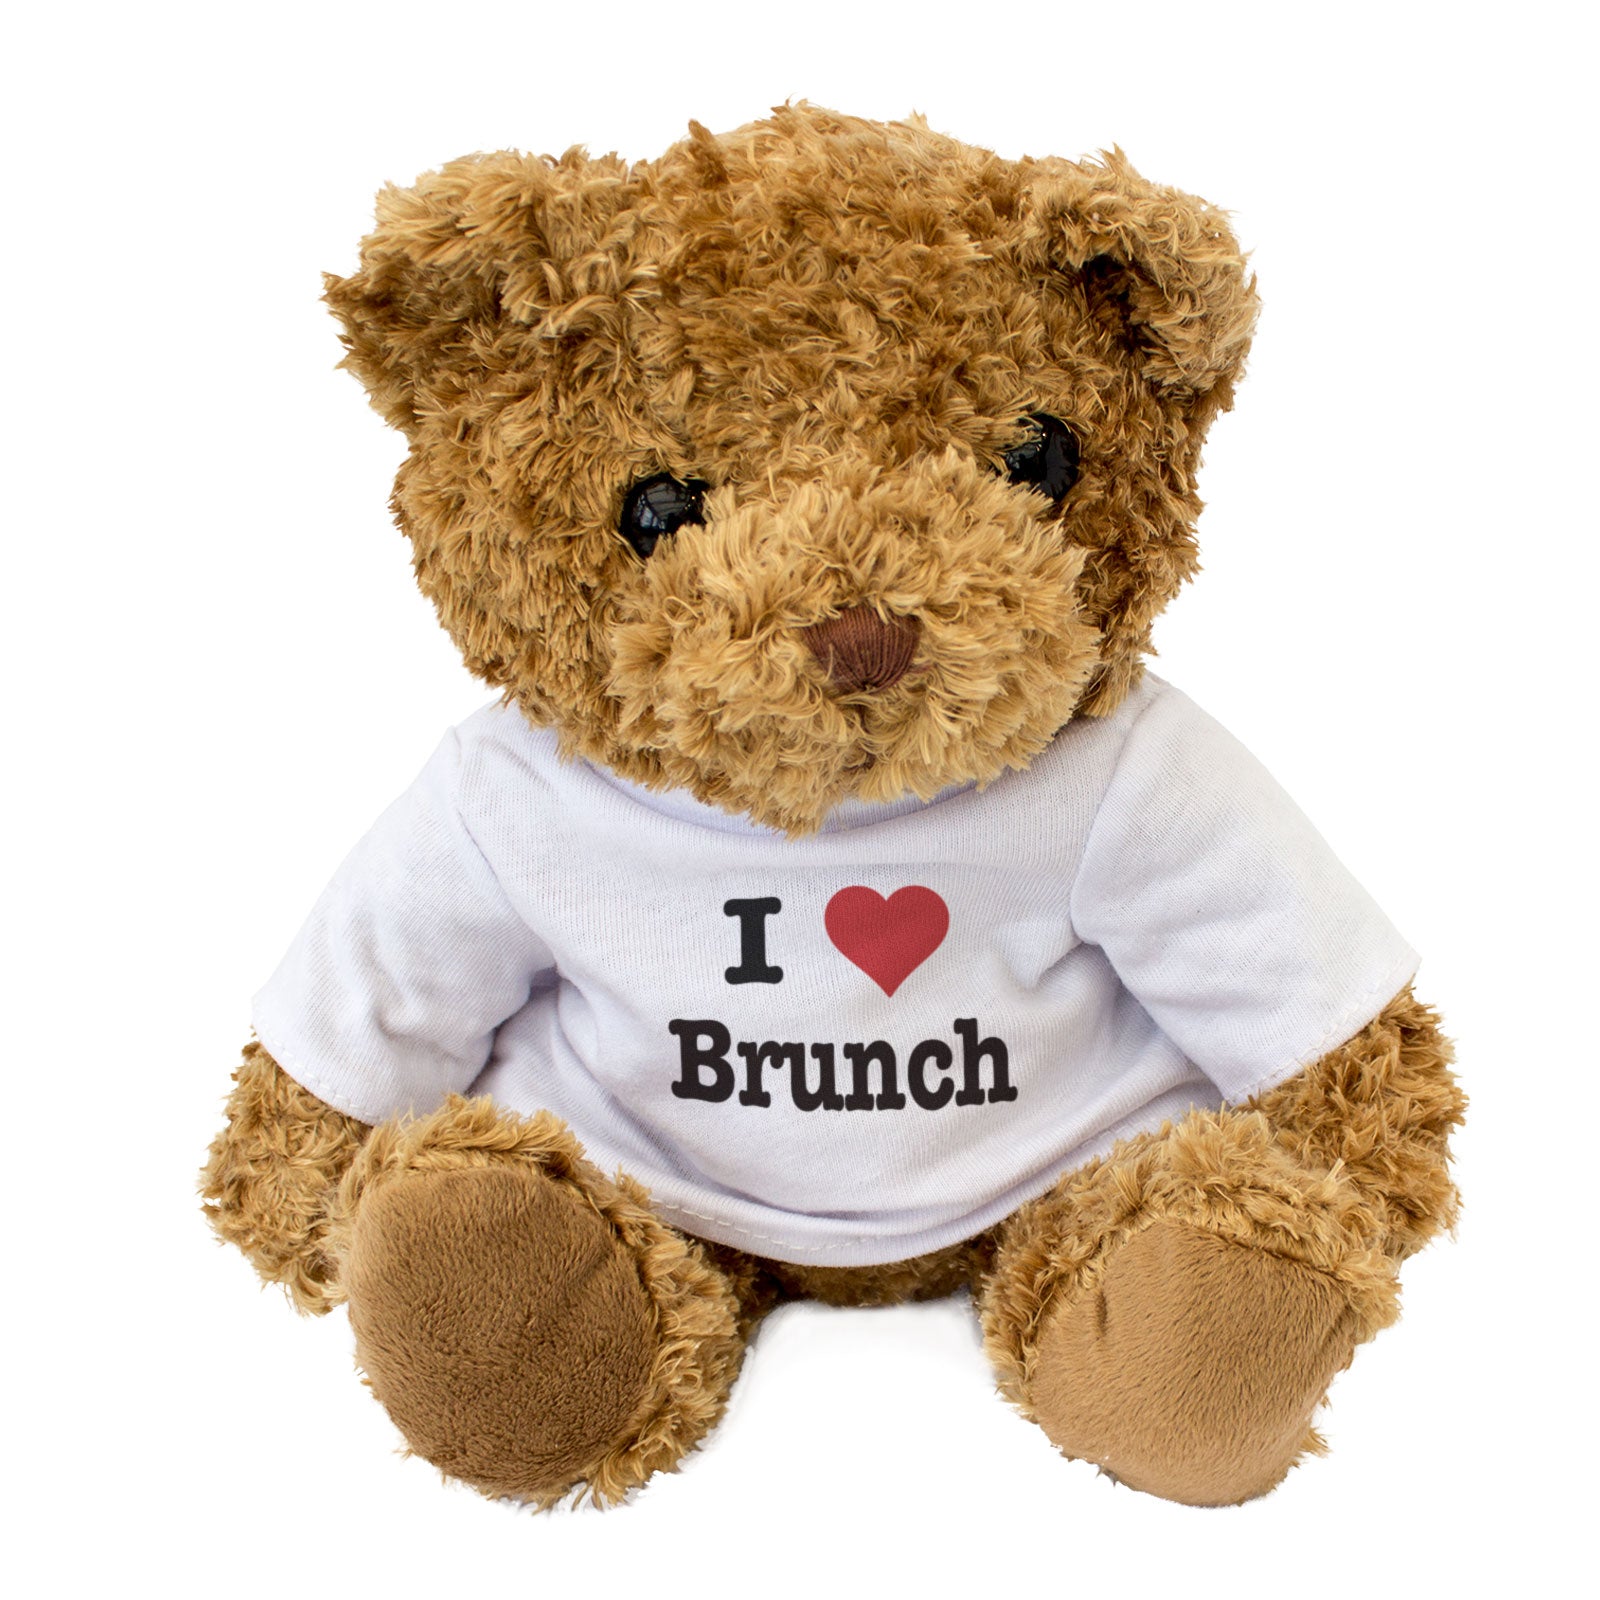 I Love Brunch - Teddy Bear